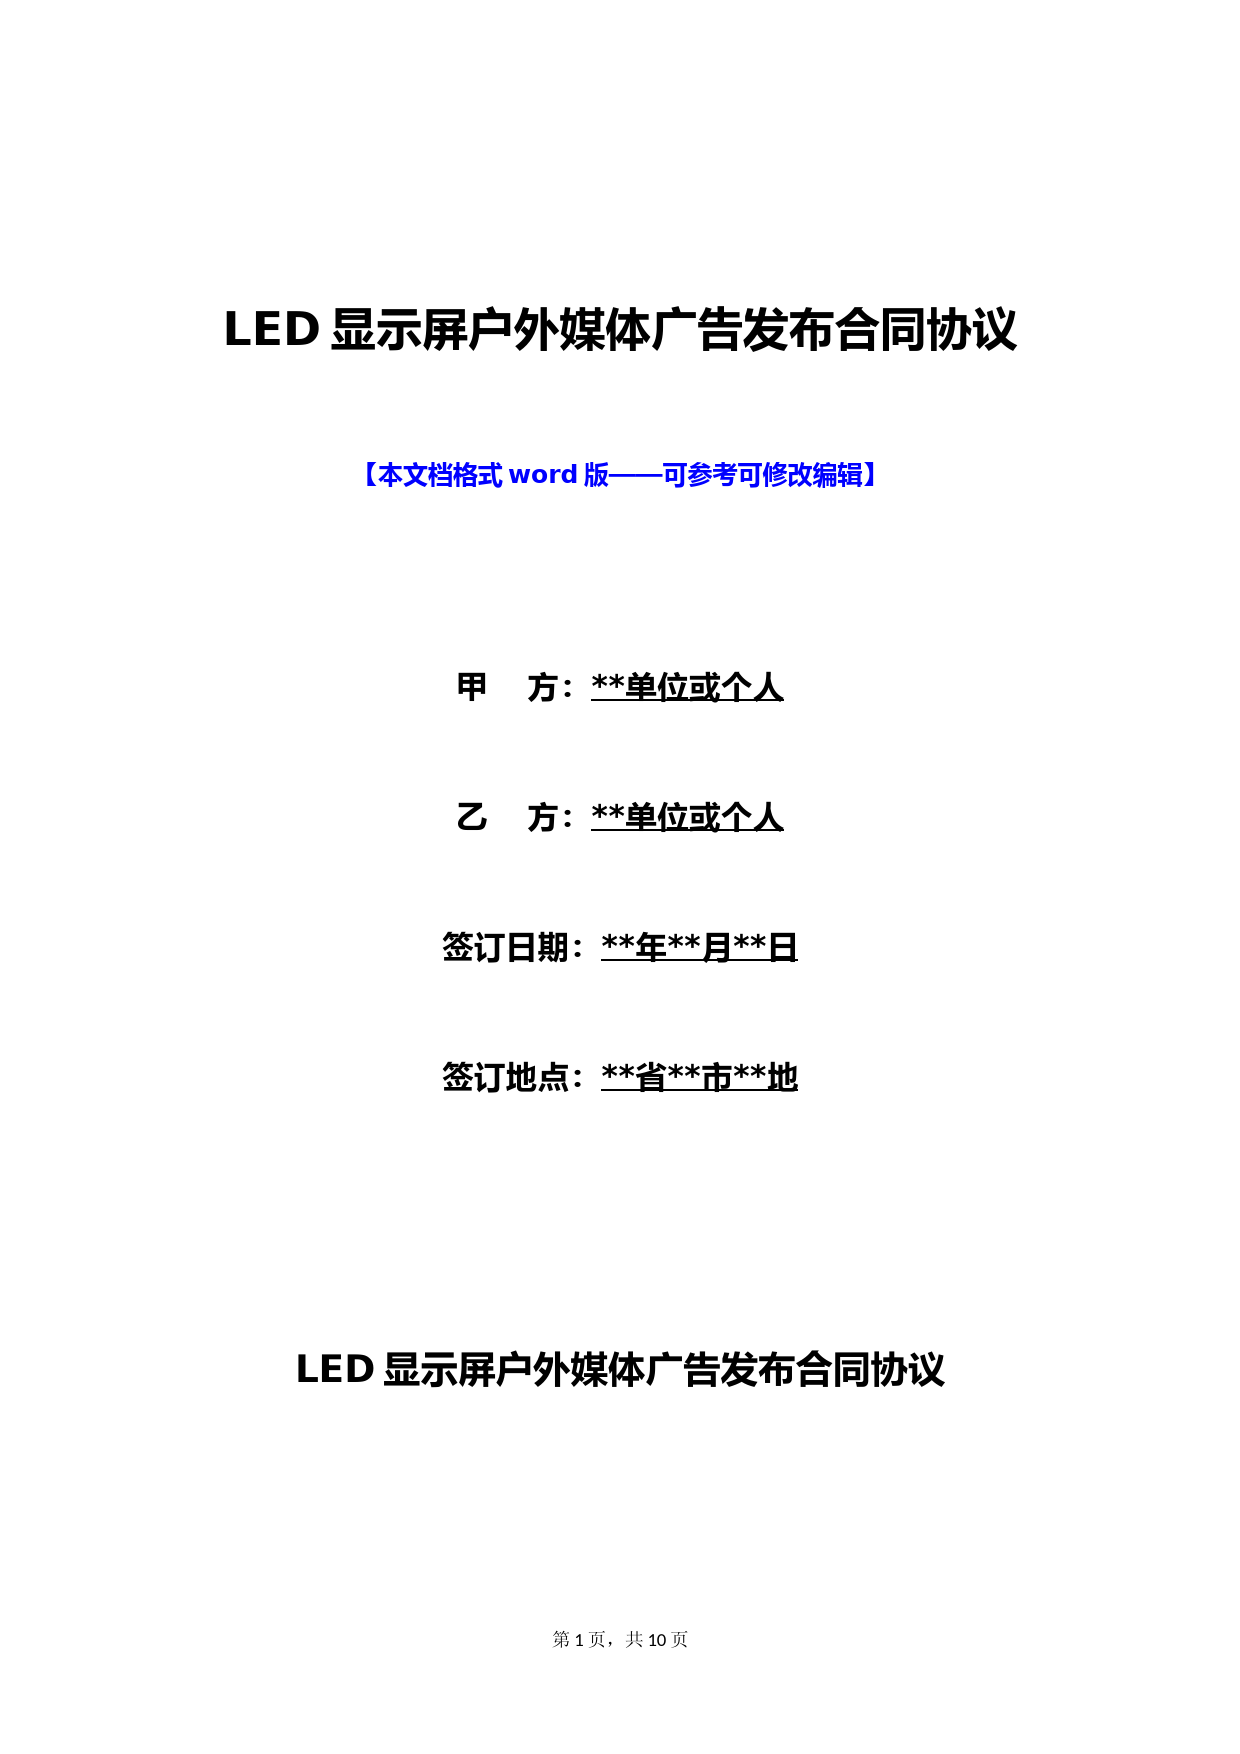 LED显示屏户外媒体广告发布合同协议(标准版)